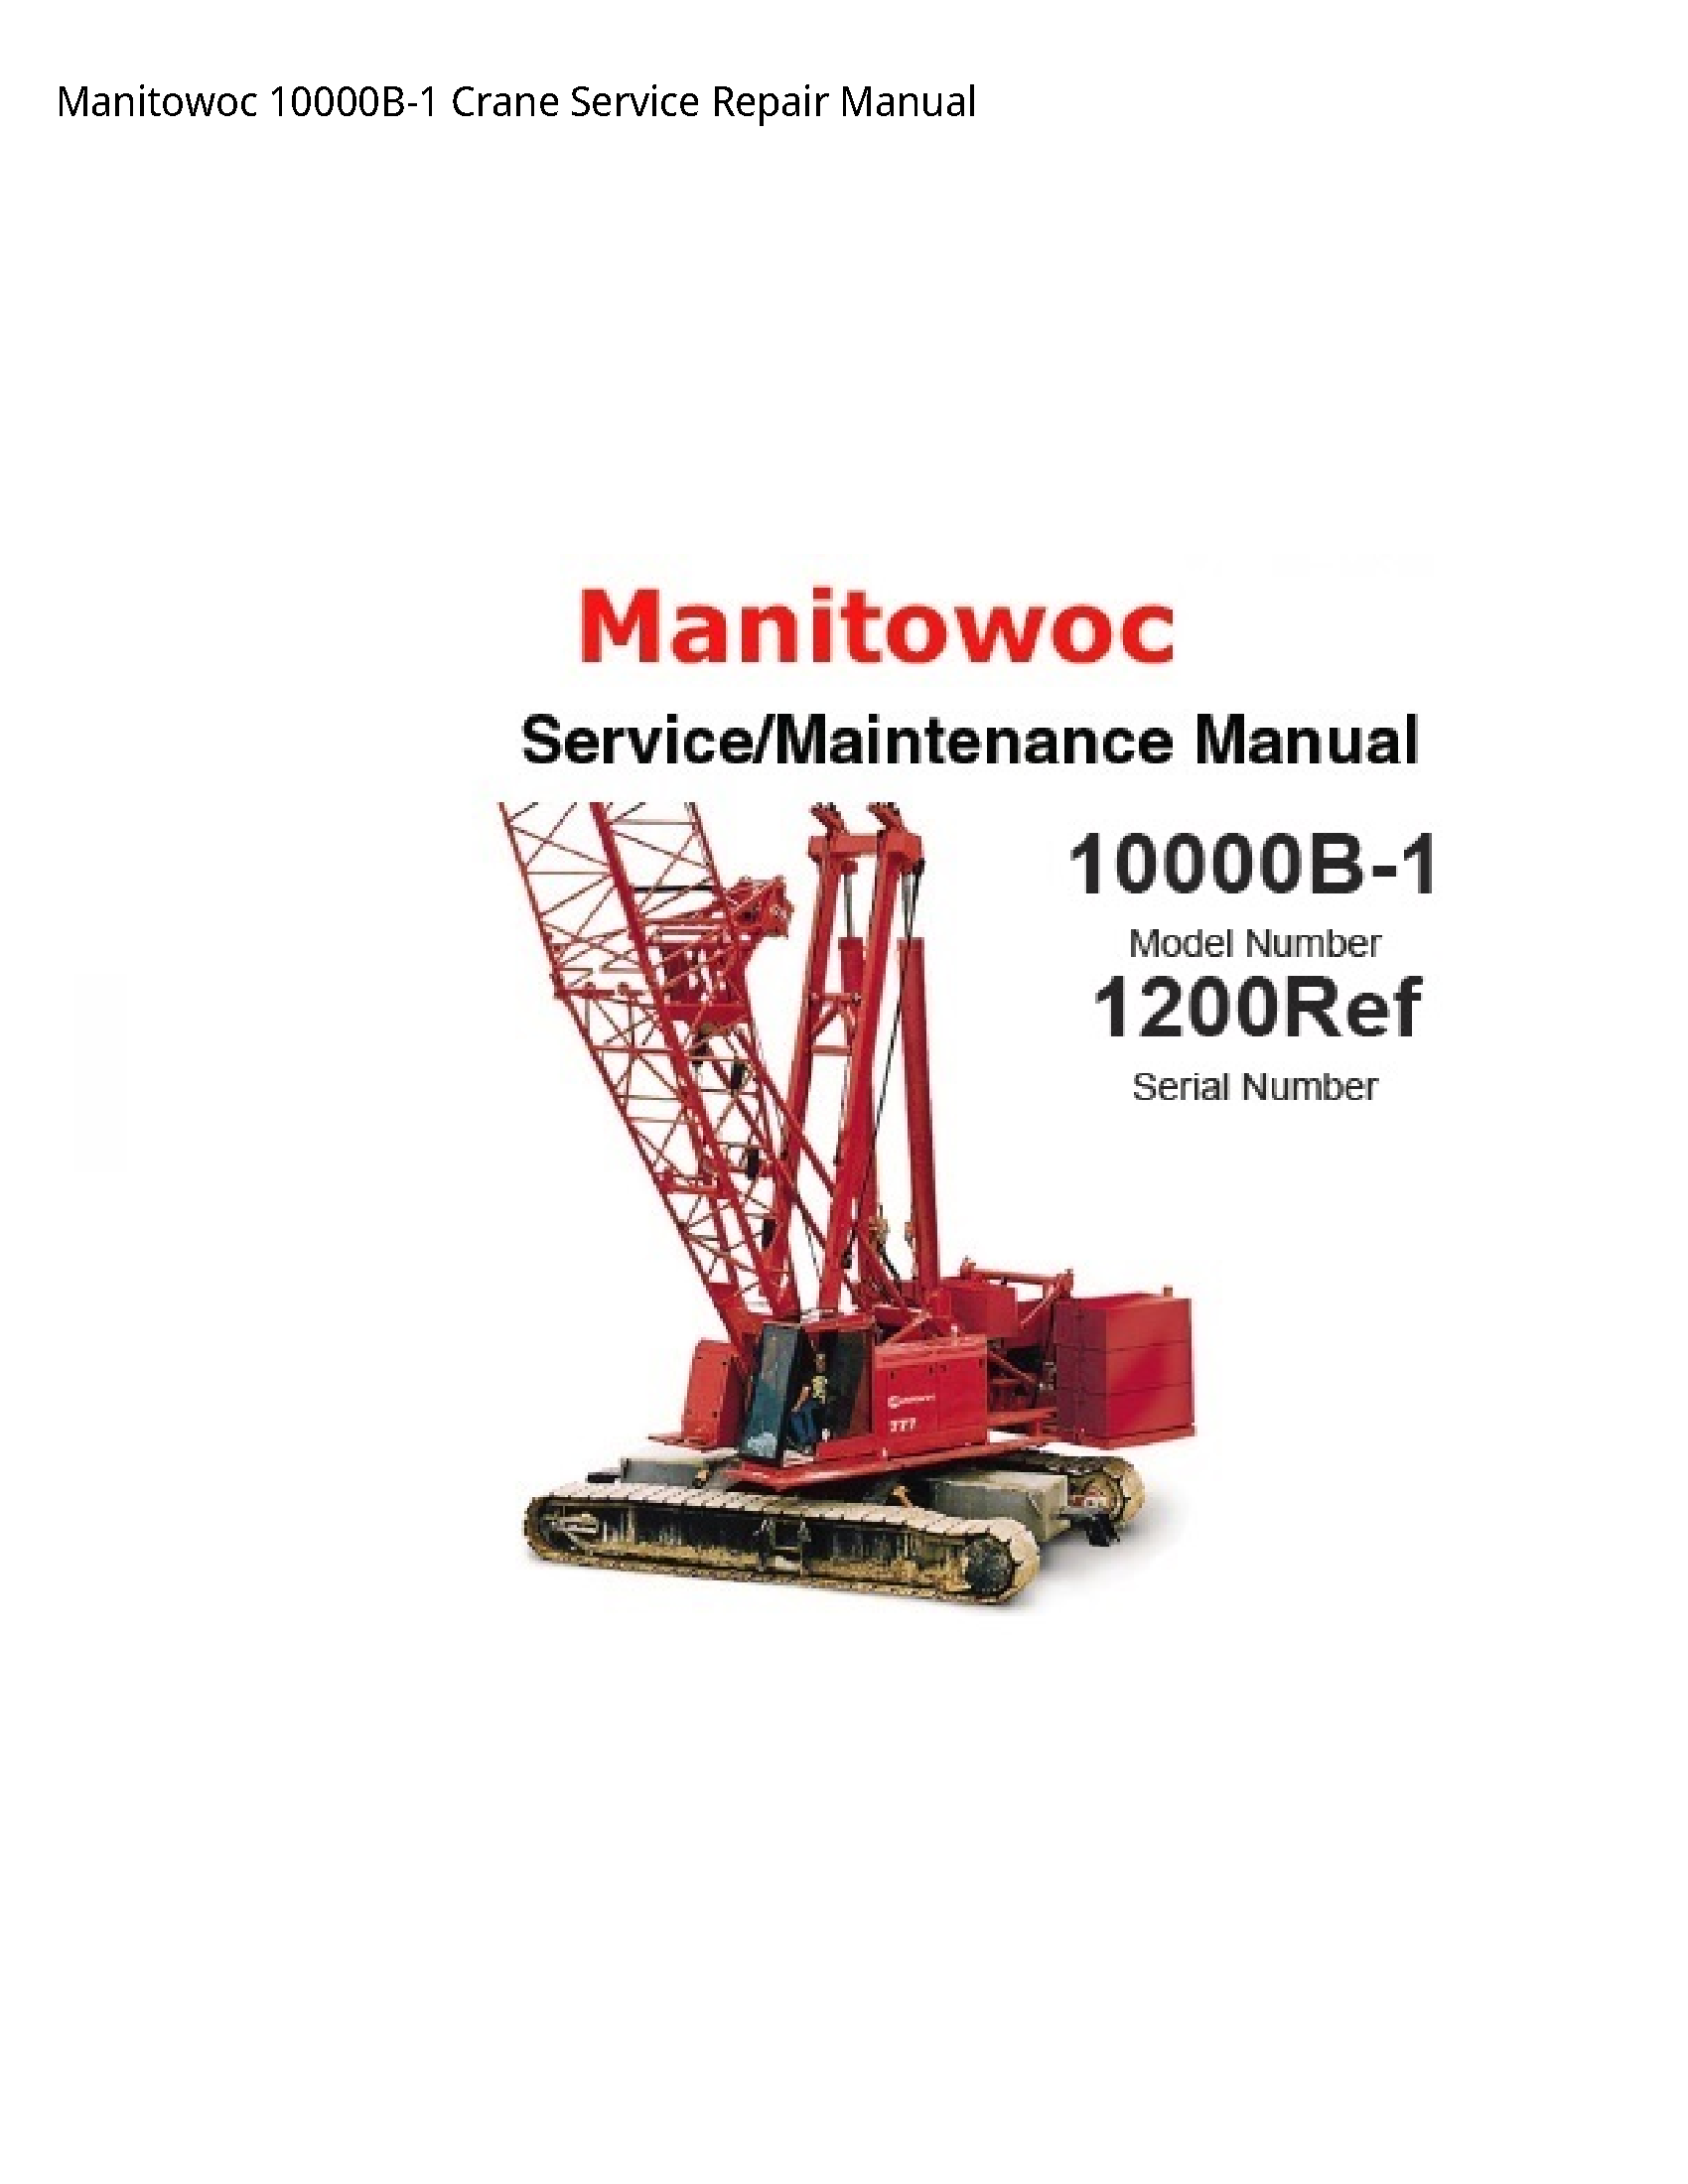 Manitowoc 10000B-1 Crane manual